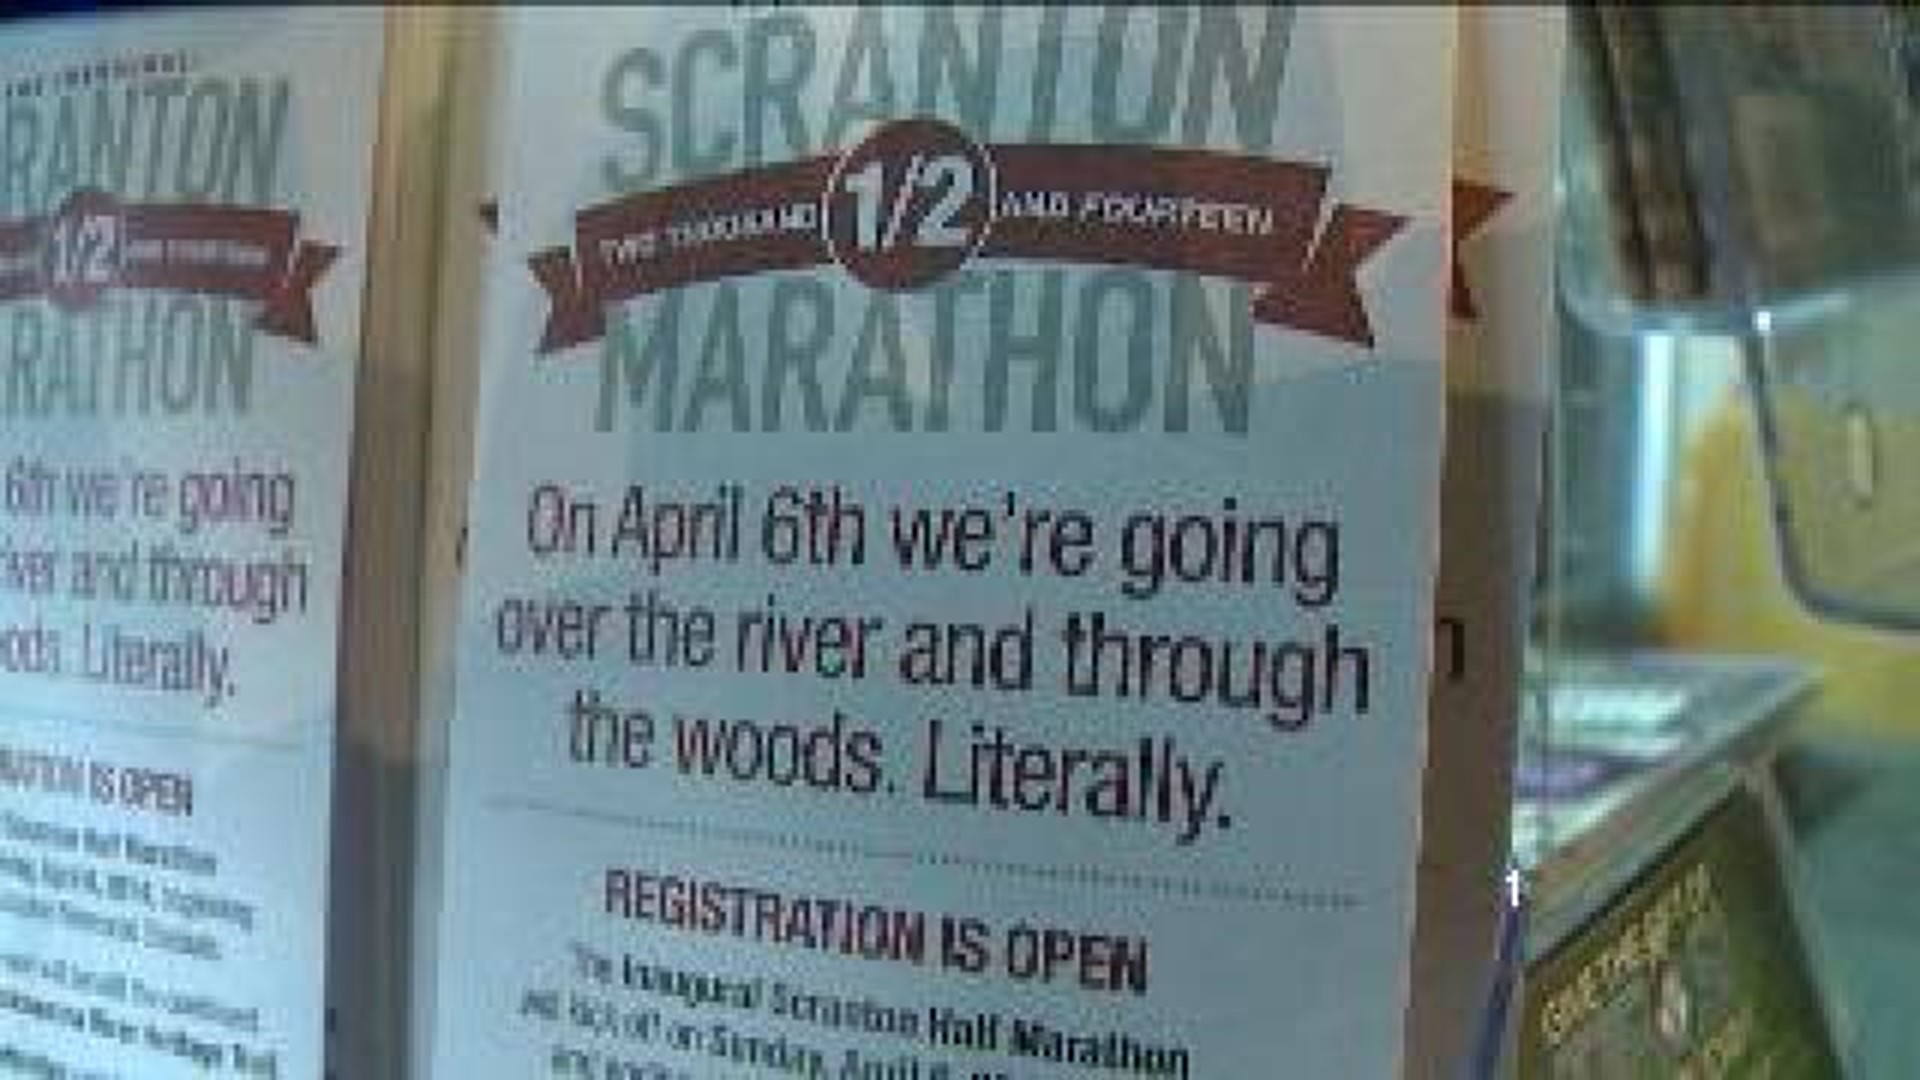 Scranton Half Marathon Sells Out